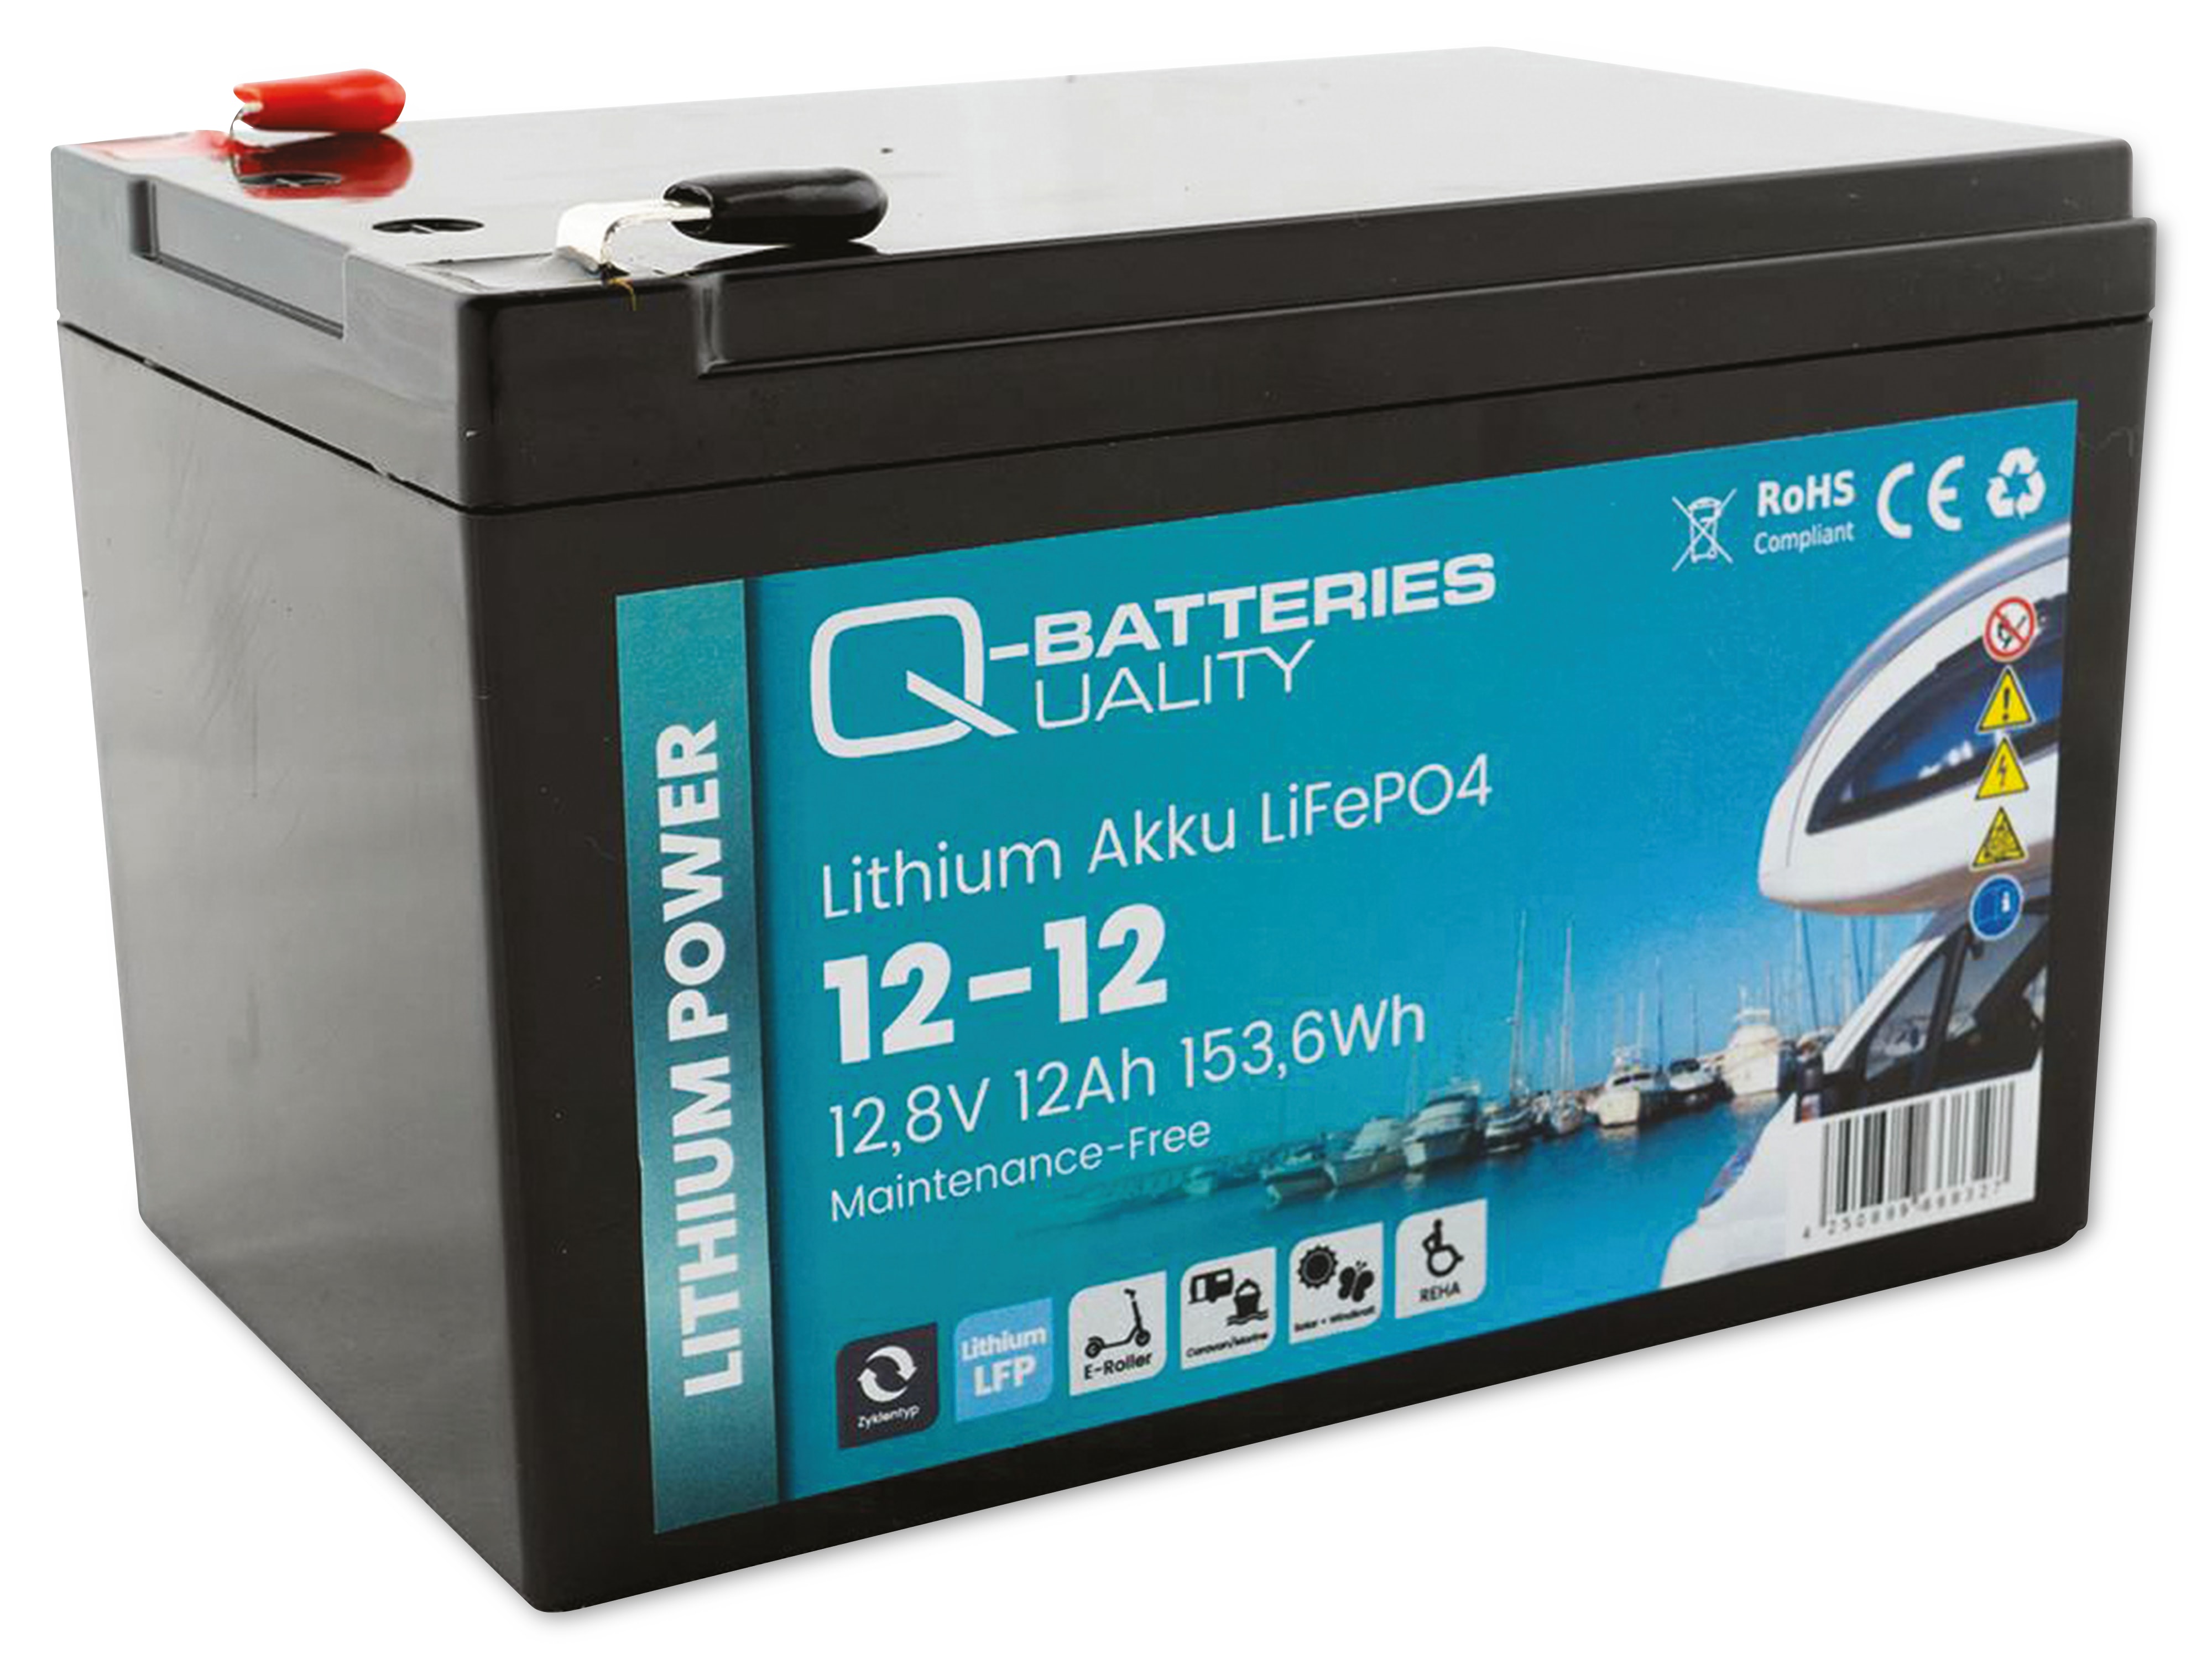 Q-BATTERIES Lithium Akku 12-12 12,8V, 12Ah, 153,6Wh LiFePO4 Batterie